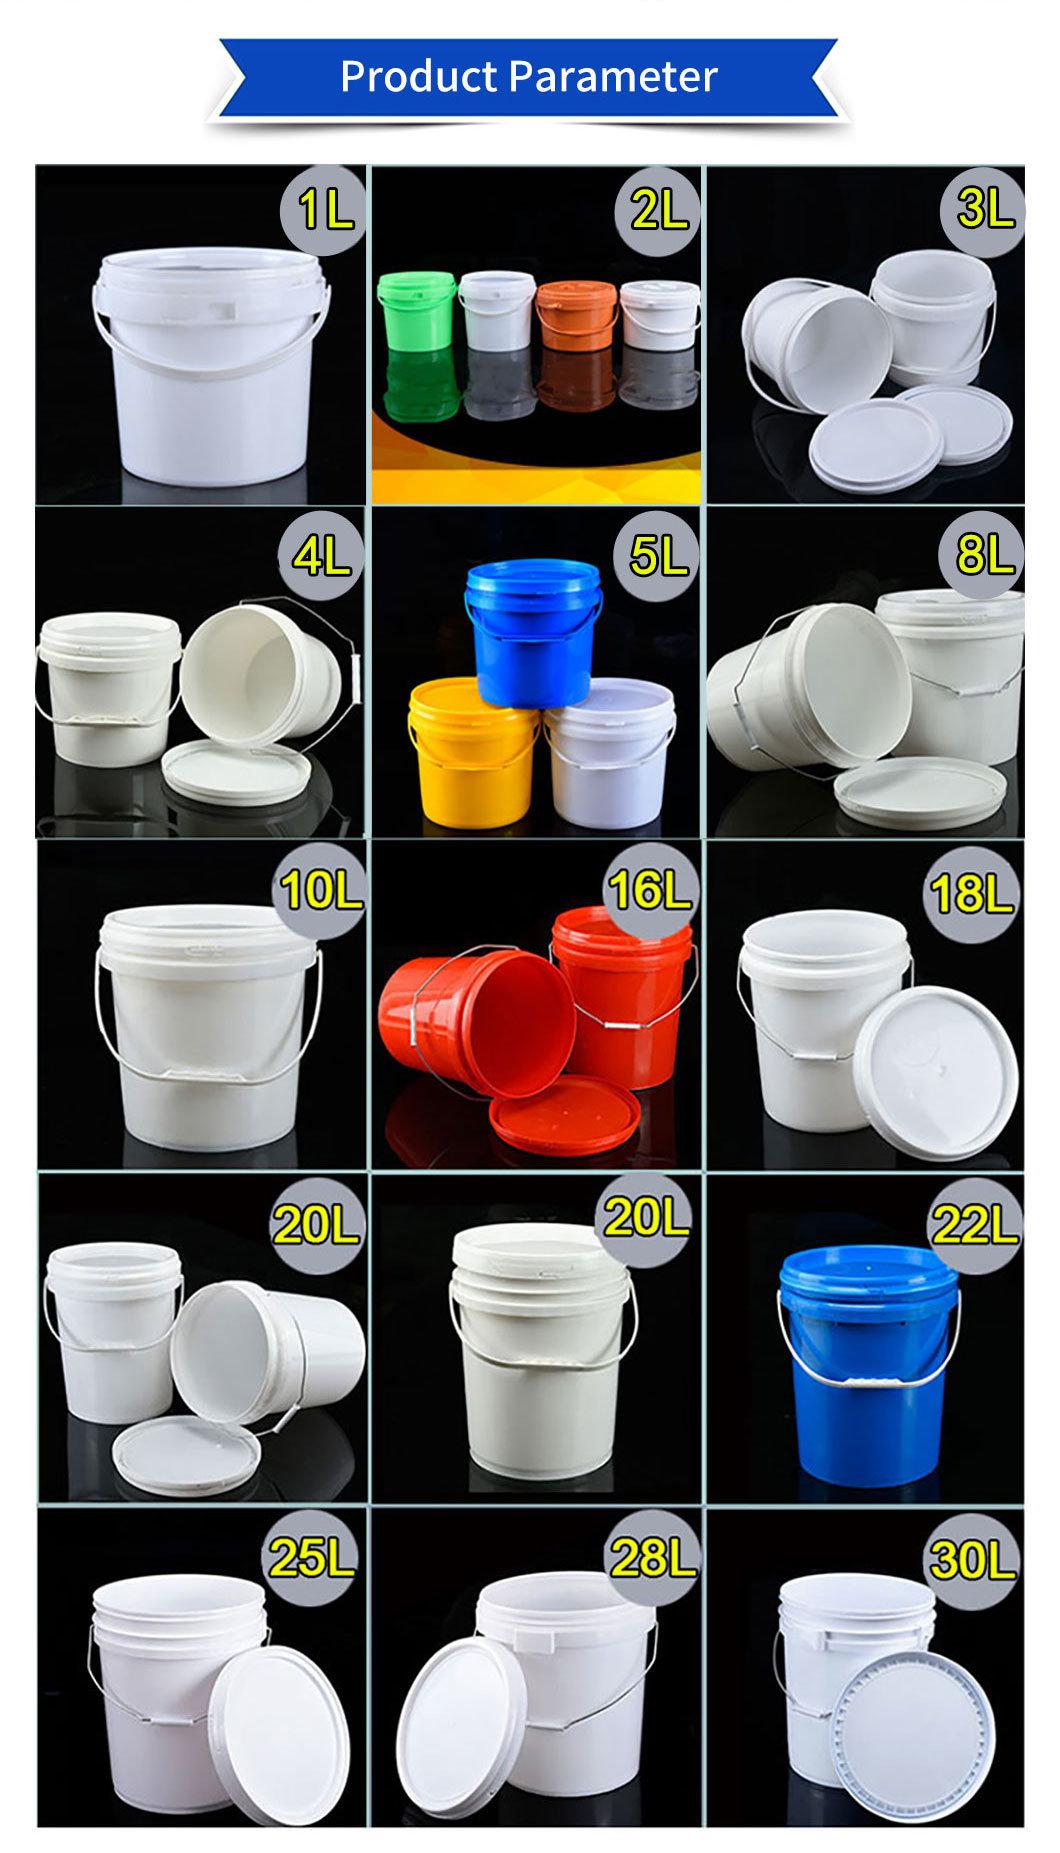 Food Grade Plastic Tub Pail Plastic Bucket for Food Storage